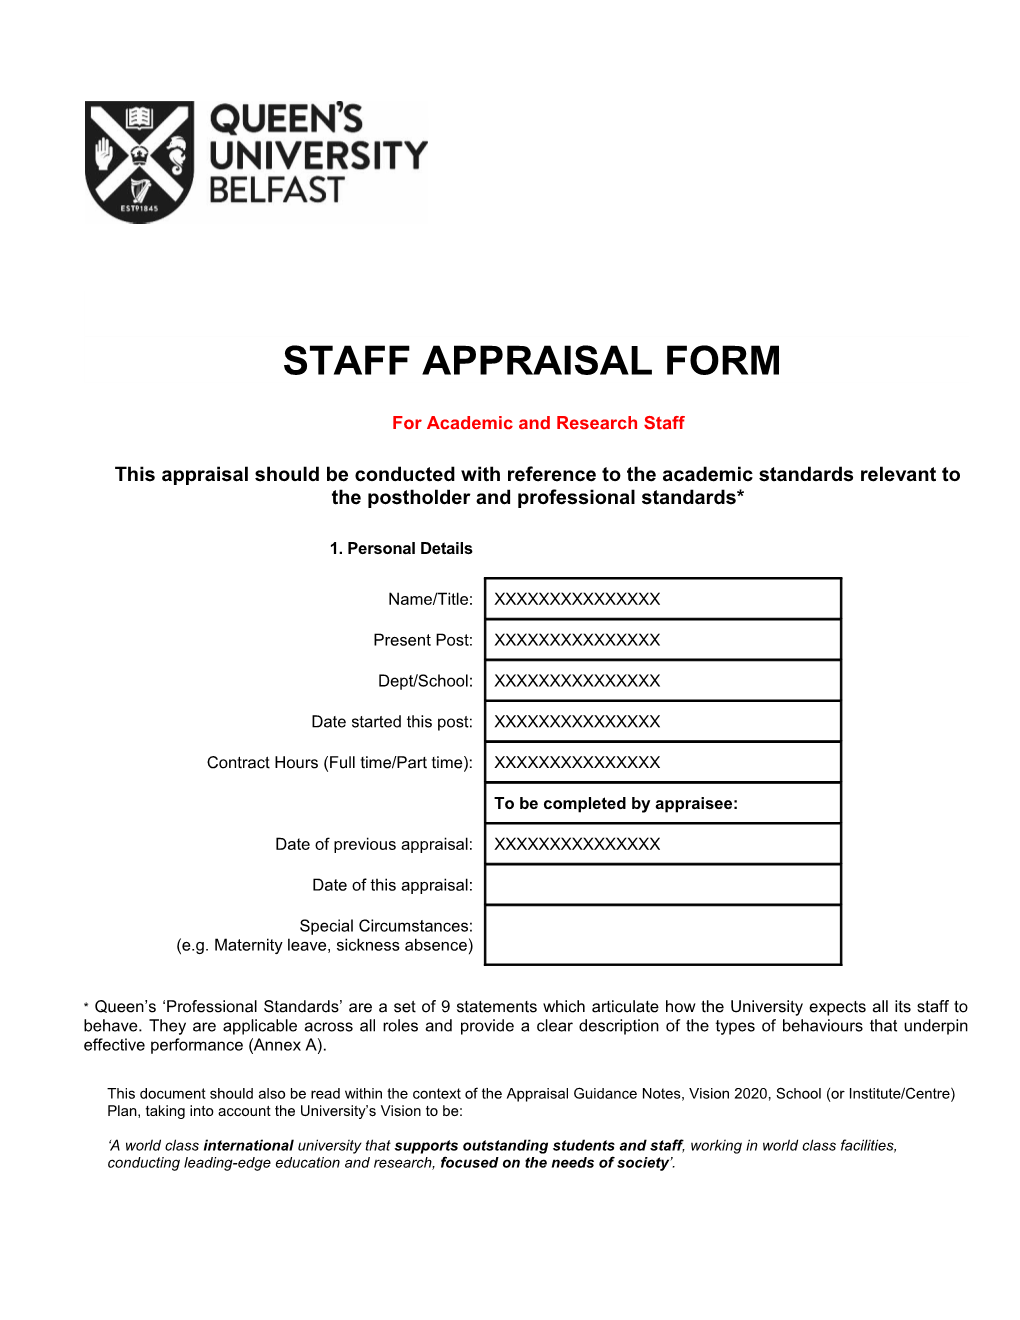 Staff Appraisal Form